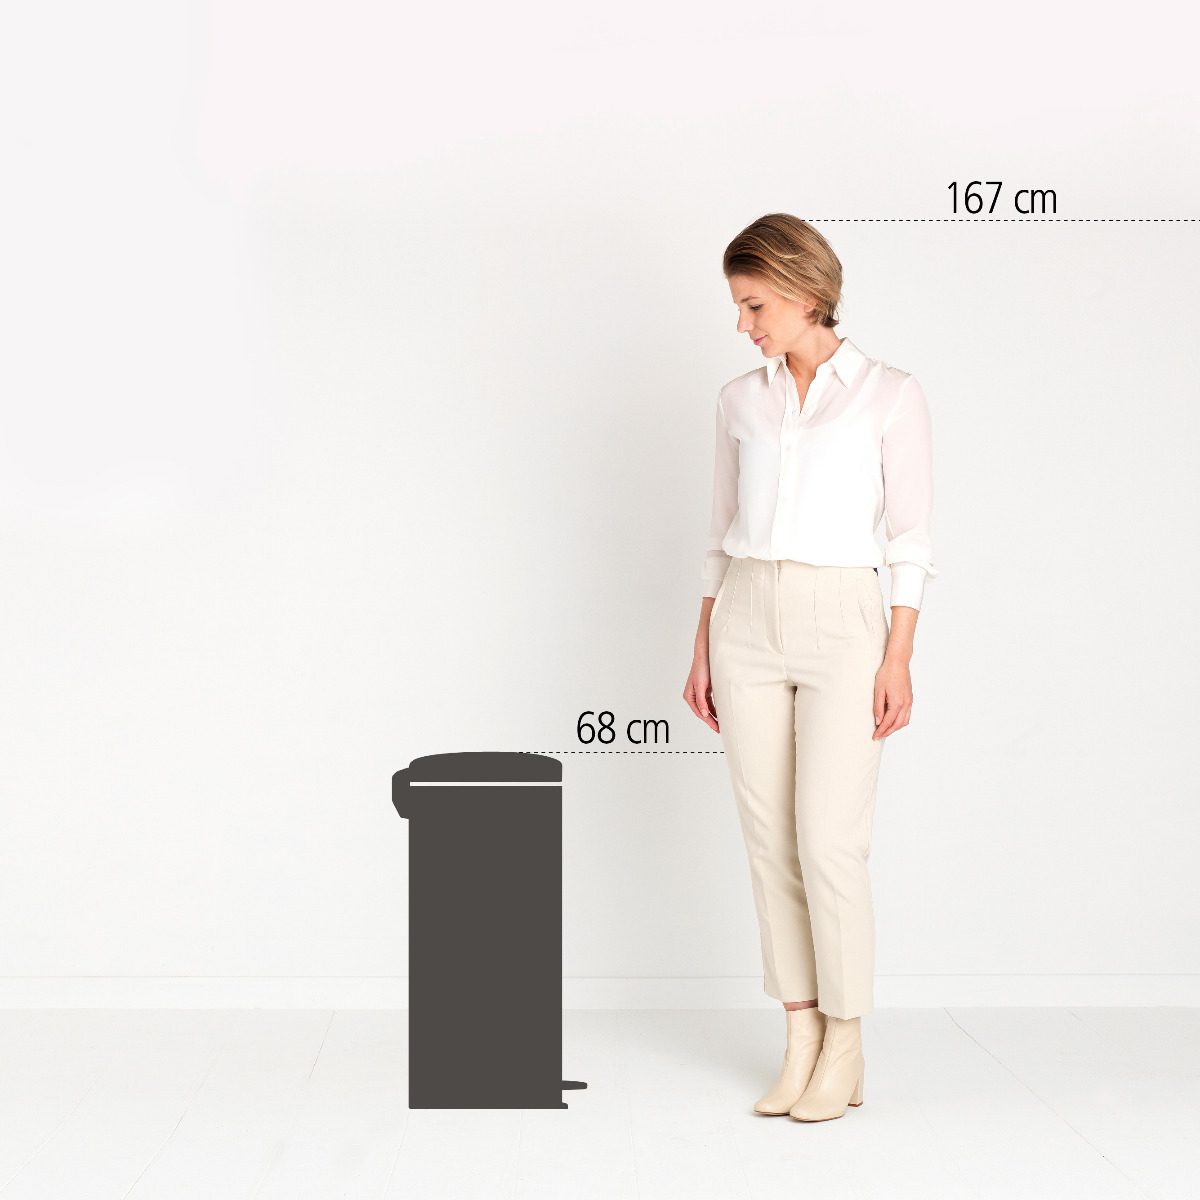 BRABANTIA Pedal Trash Can NewIcon 30 L White Height 68 cm